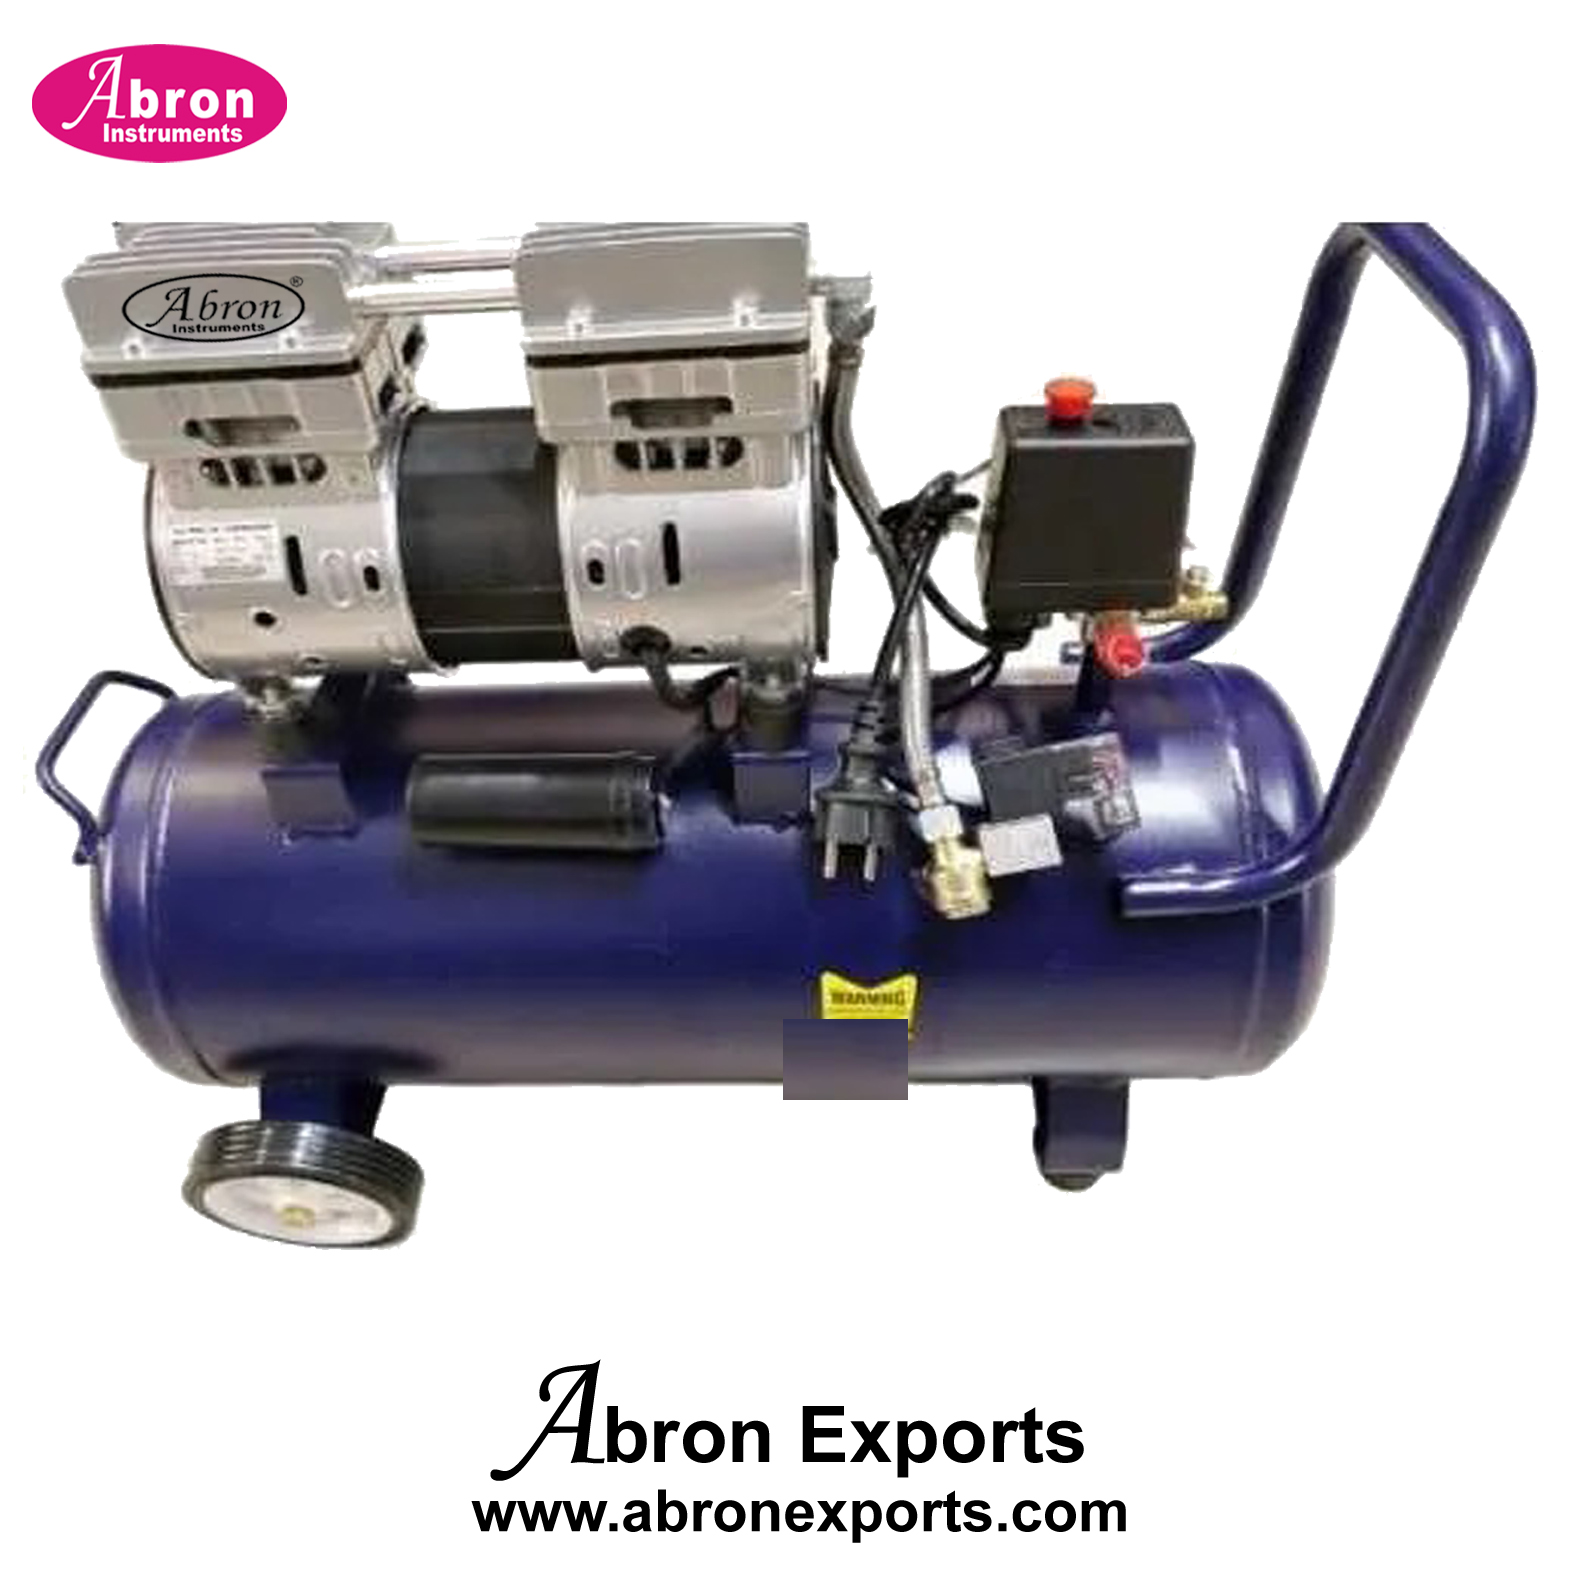 Dental Air Pump Compressor Oil free With Small Tank Complete Setup Abron ABM-4198DP10L 